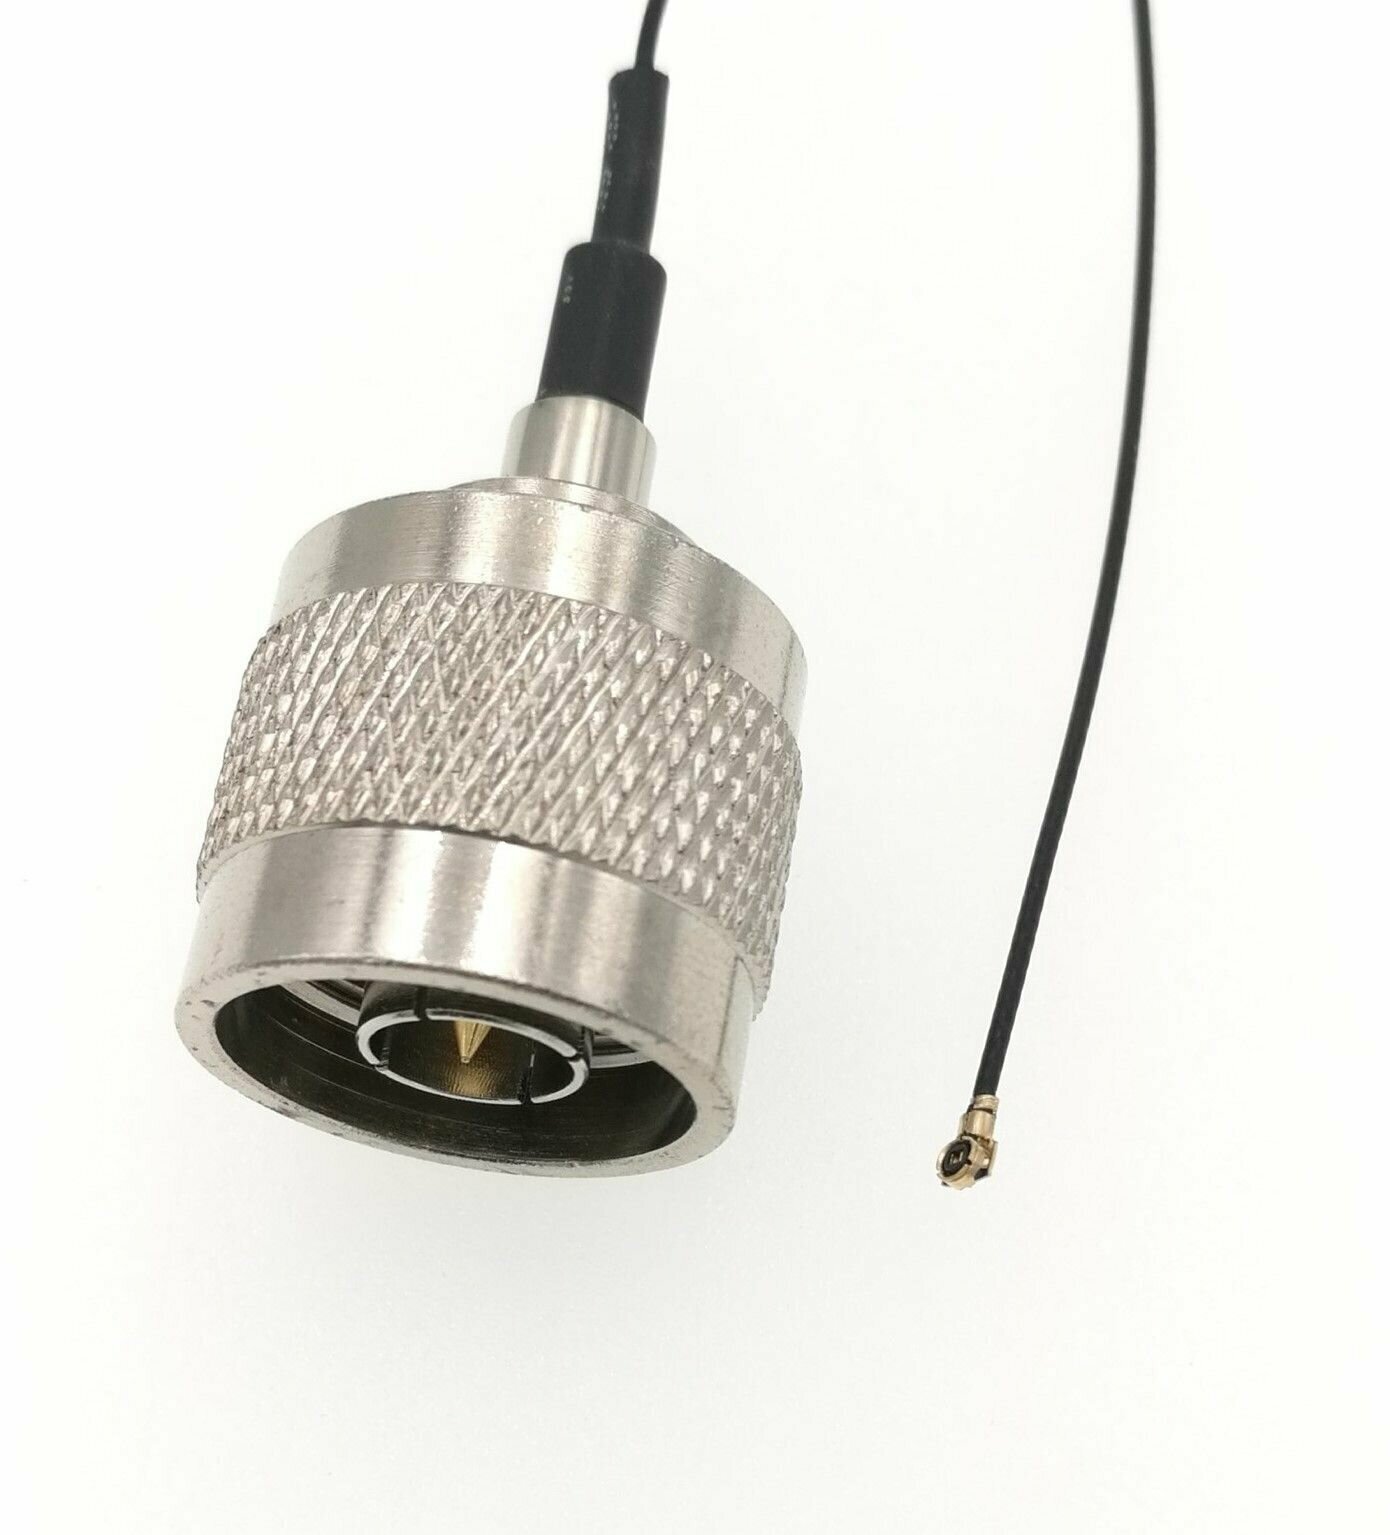 Антенный адаптер для модема-роутера (пигтейл) IPEX4(MHF4)-N(male) кабель RF081 30см.